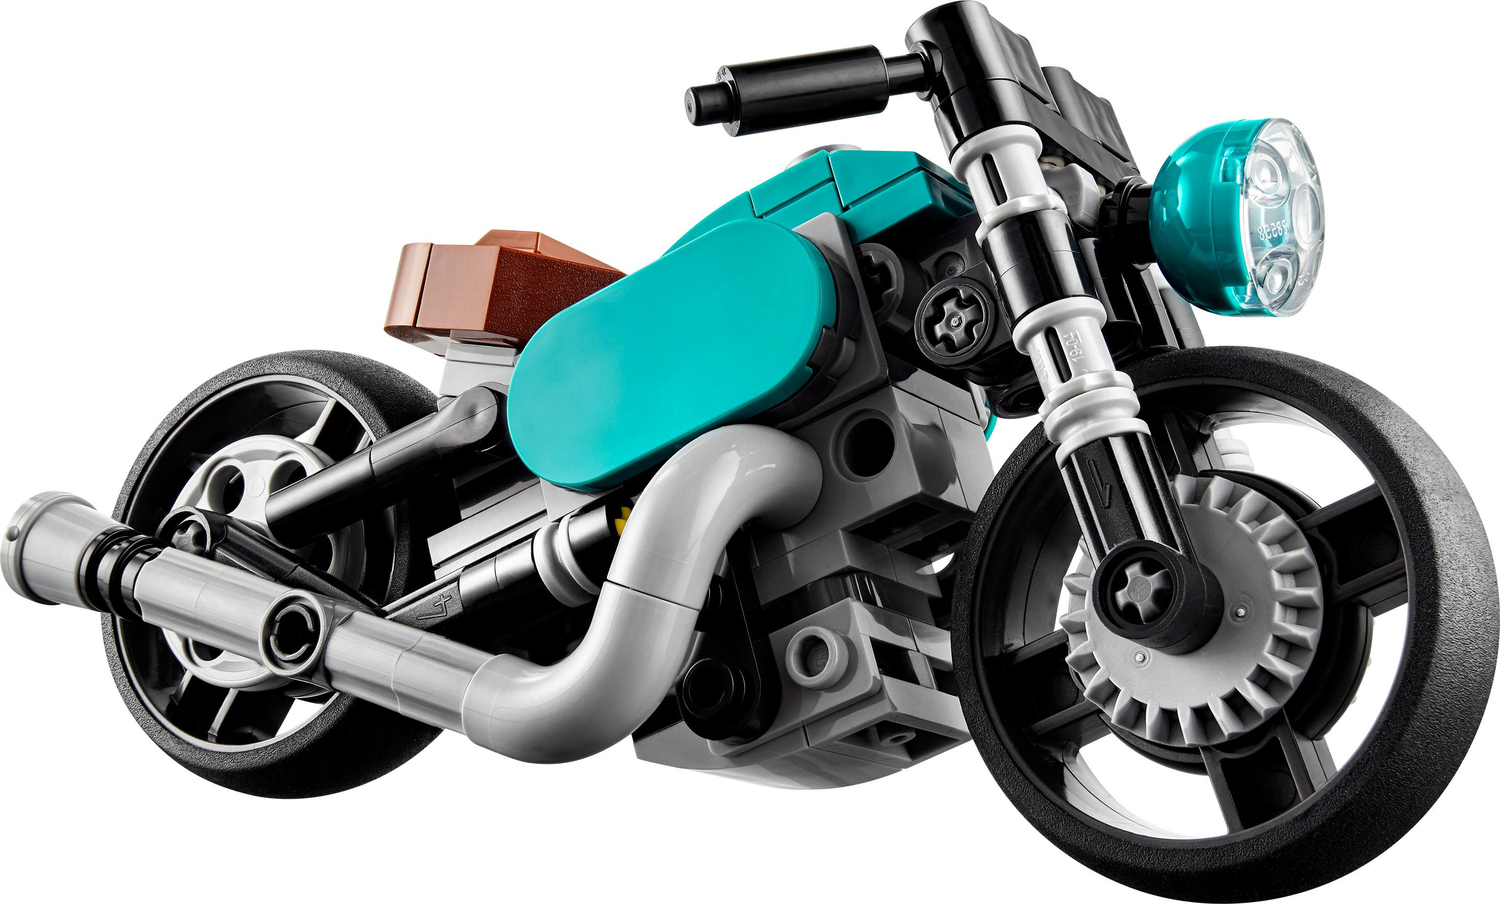 LEGO® Creator 3-in-1: Vintage Motorcycle Set